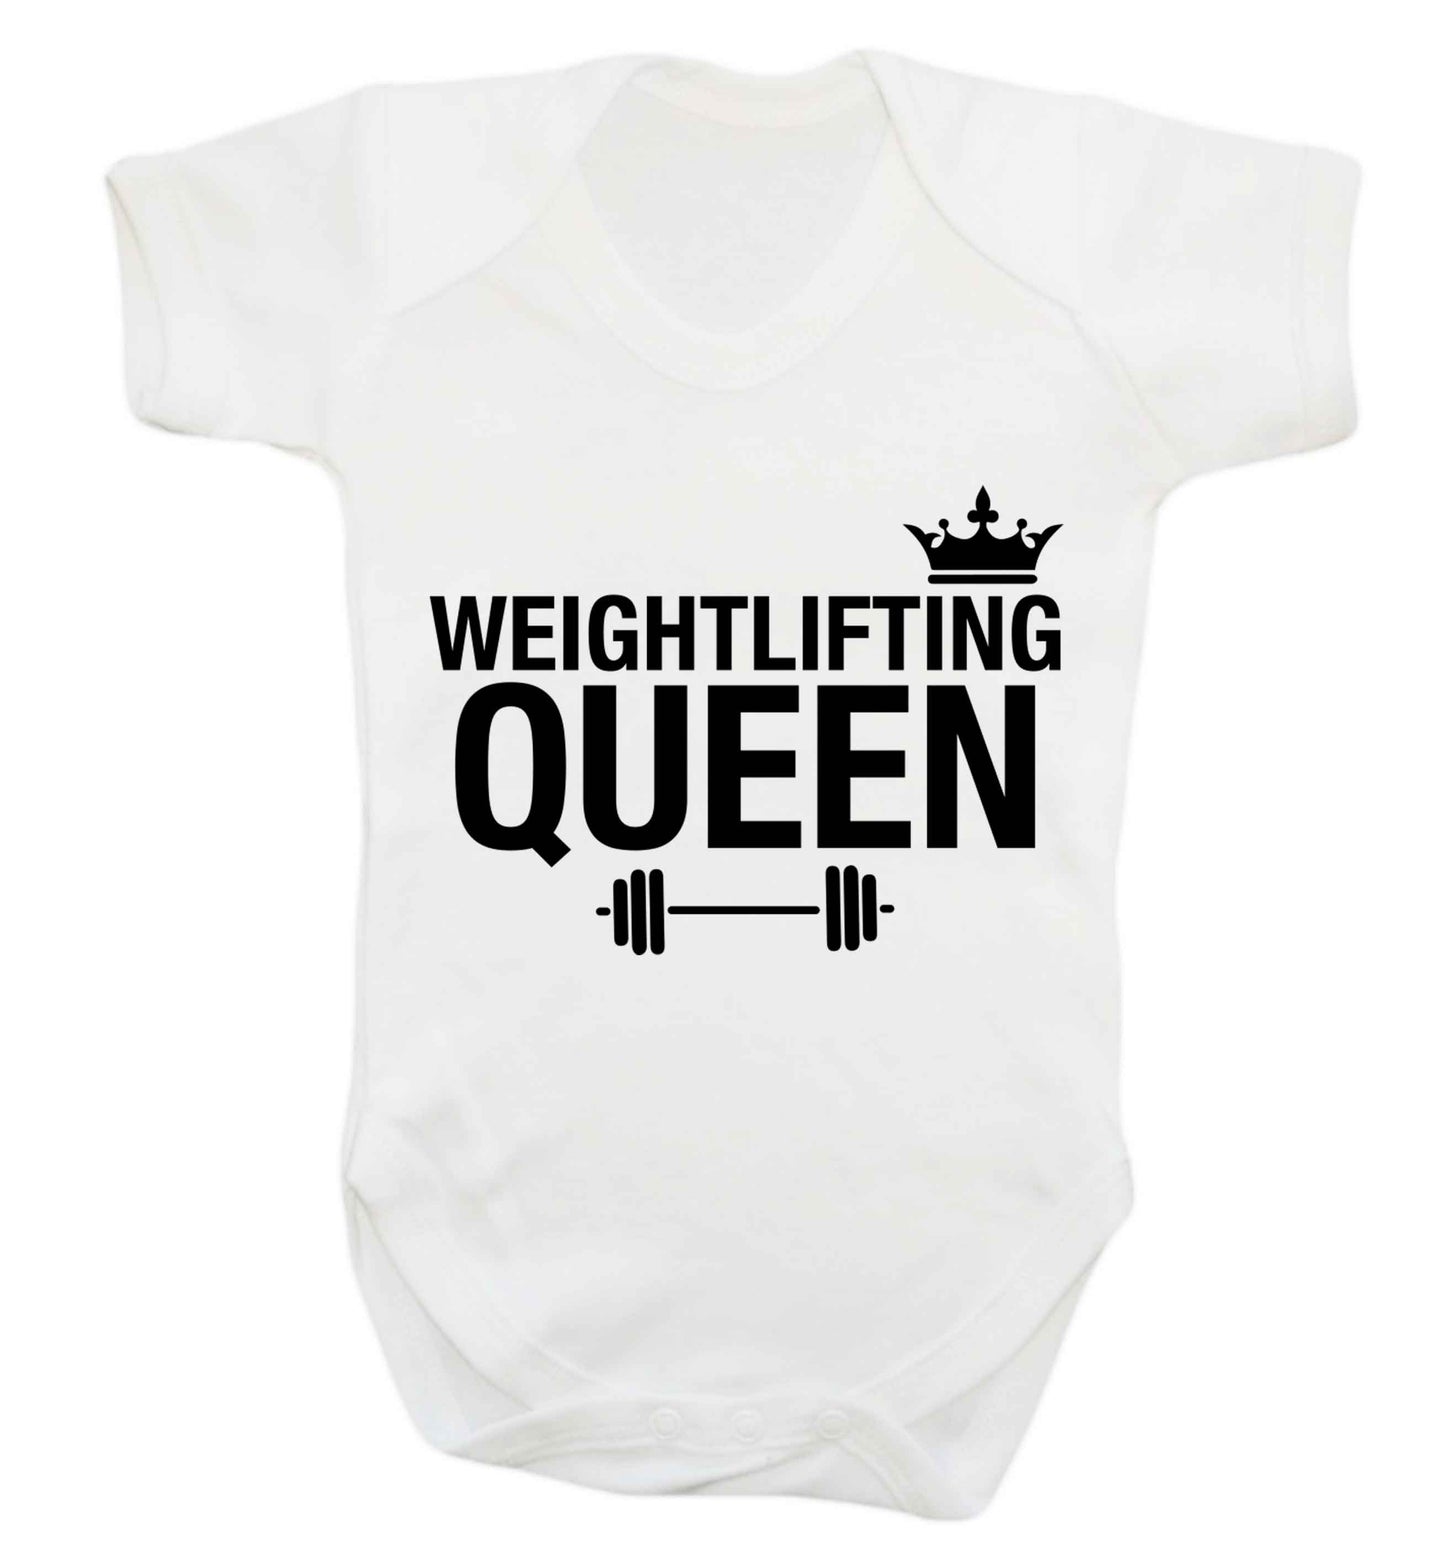 Weightlifting Queen Baby Vest white 18-24 months